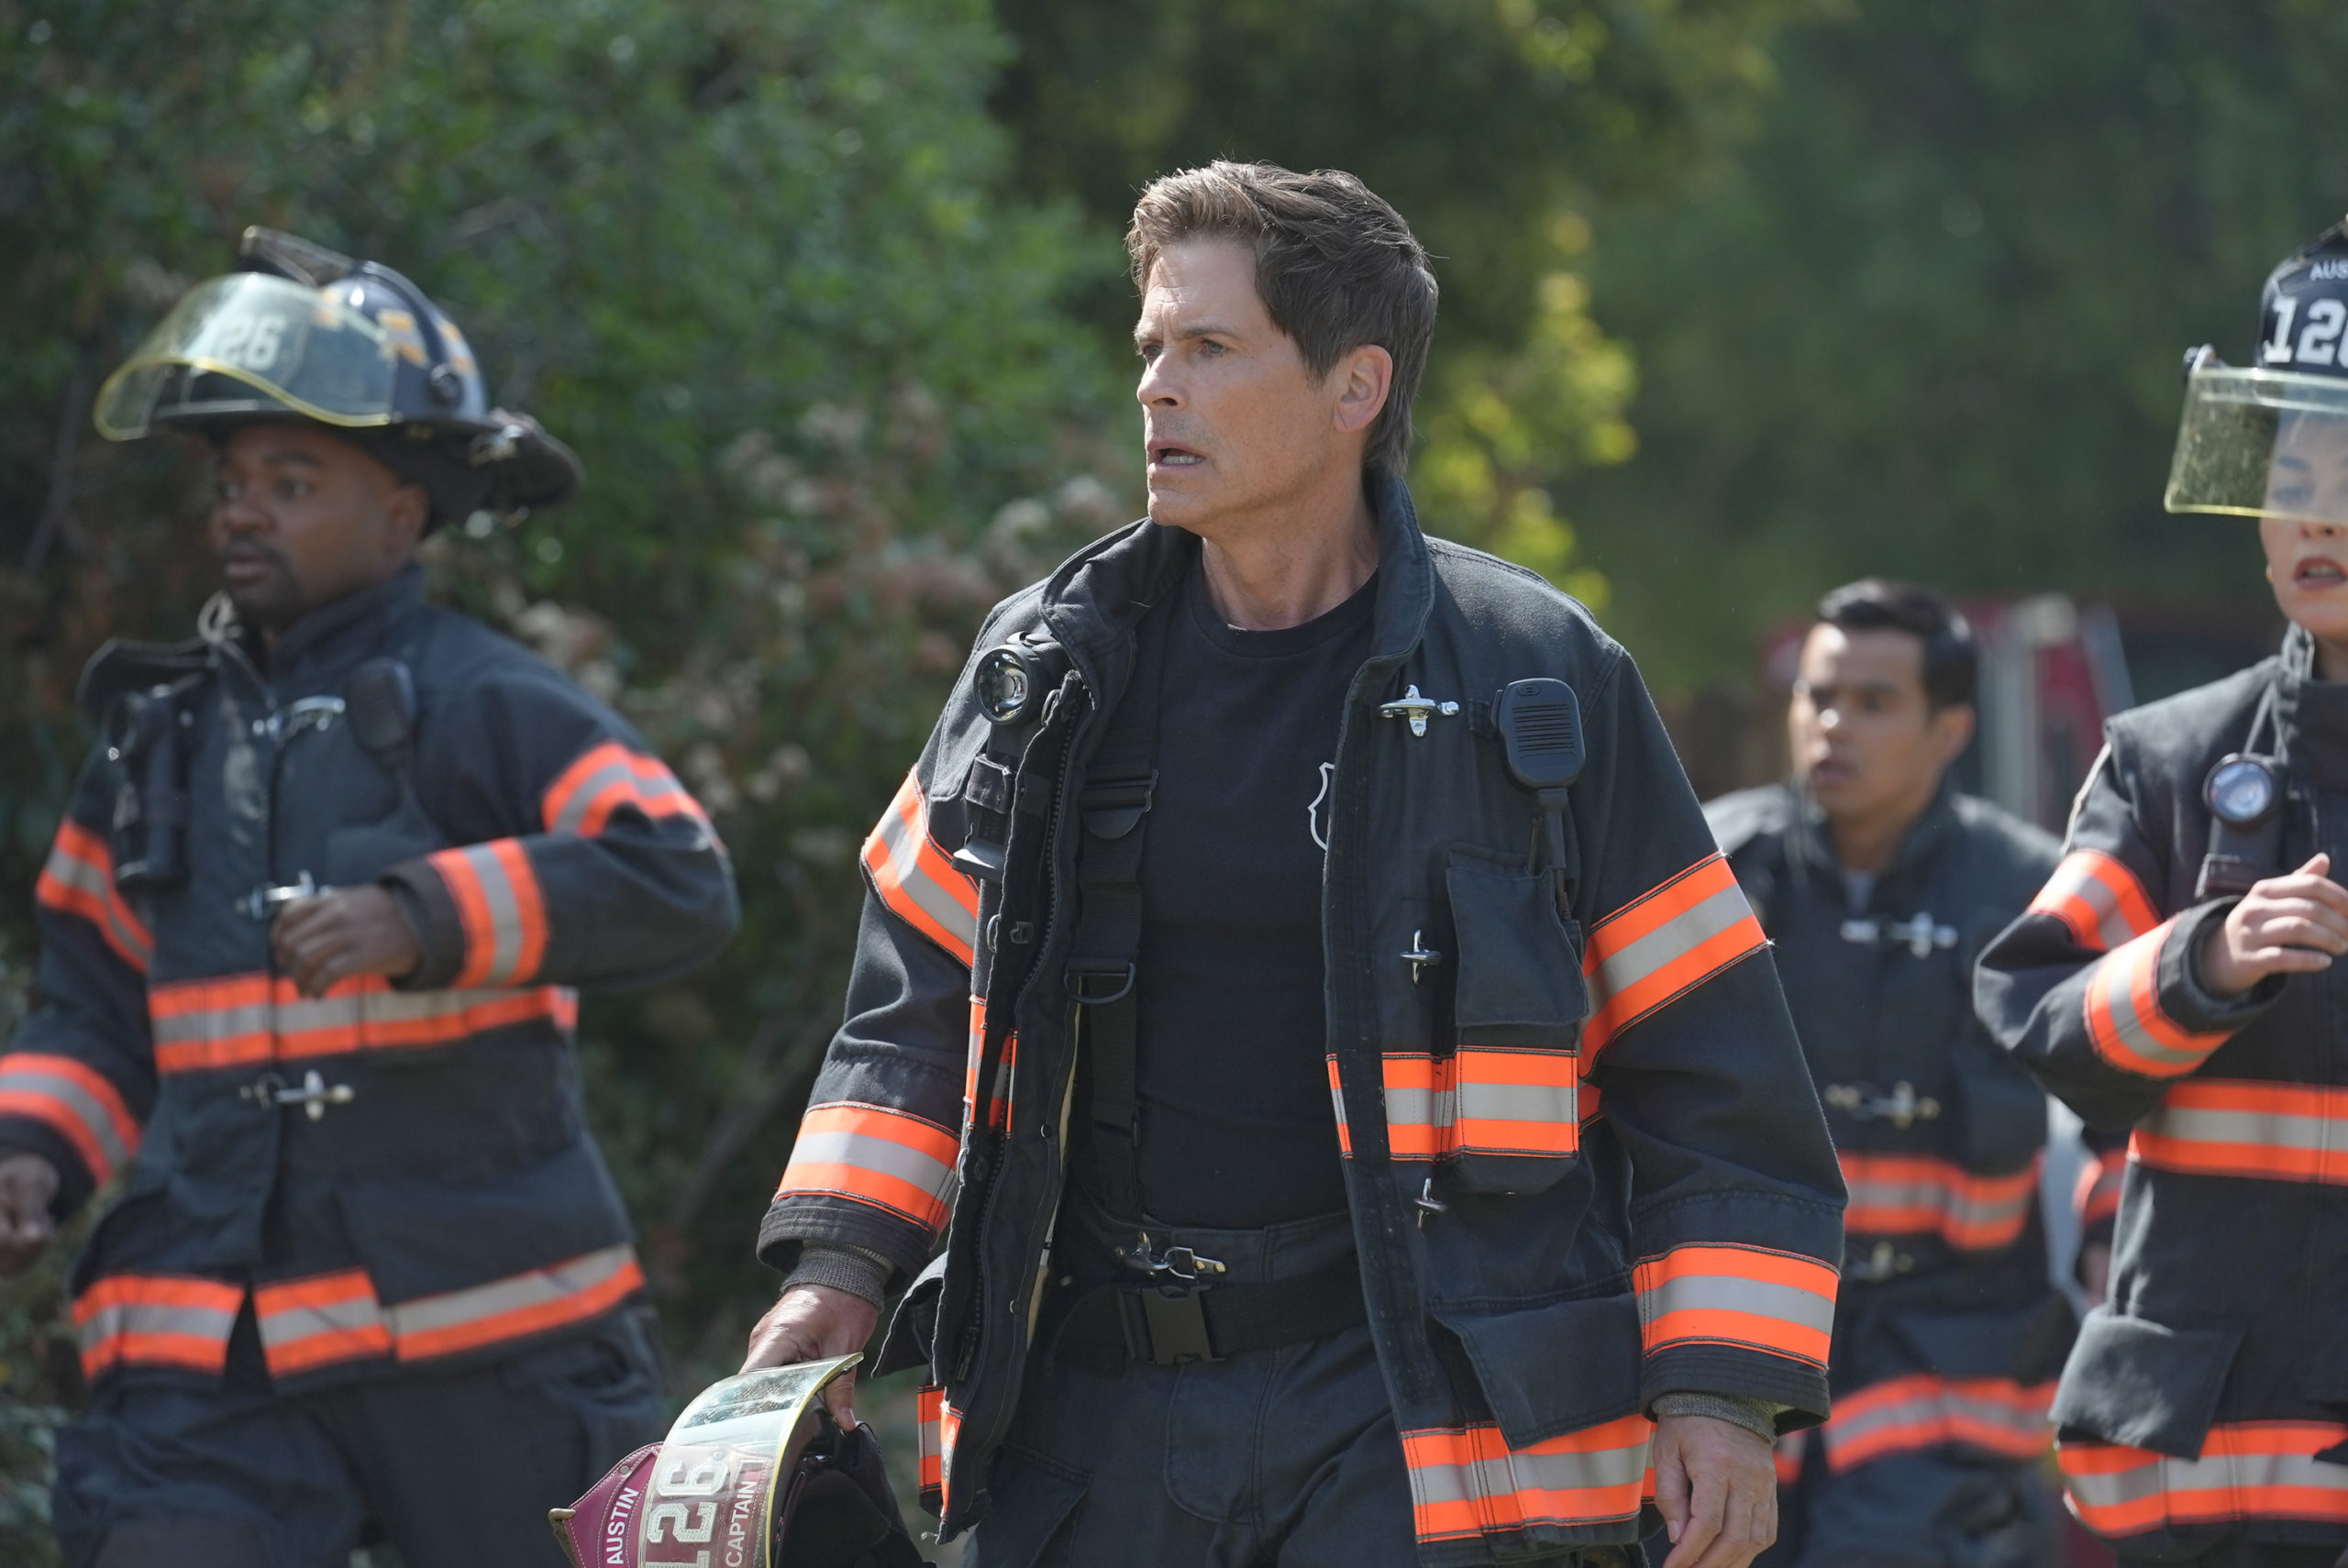 911 Lone Star Season Five Premiere of FOX Drama Delayed Until Fall